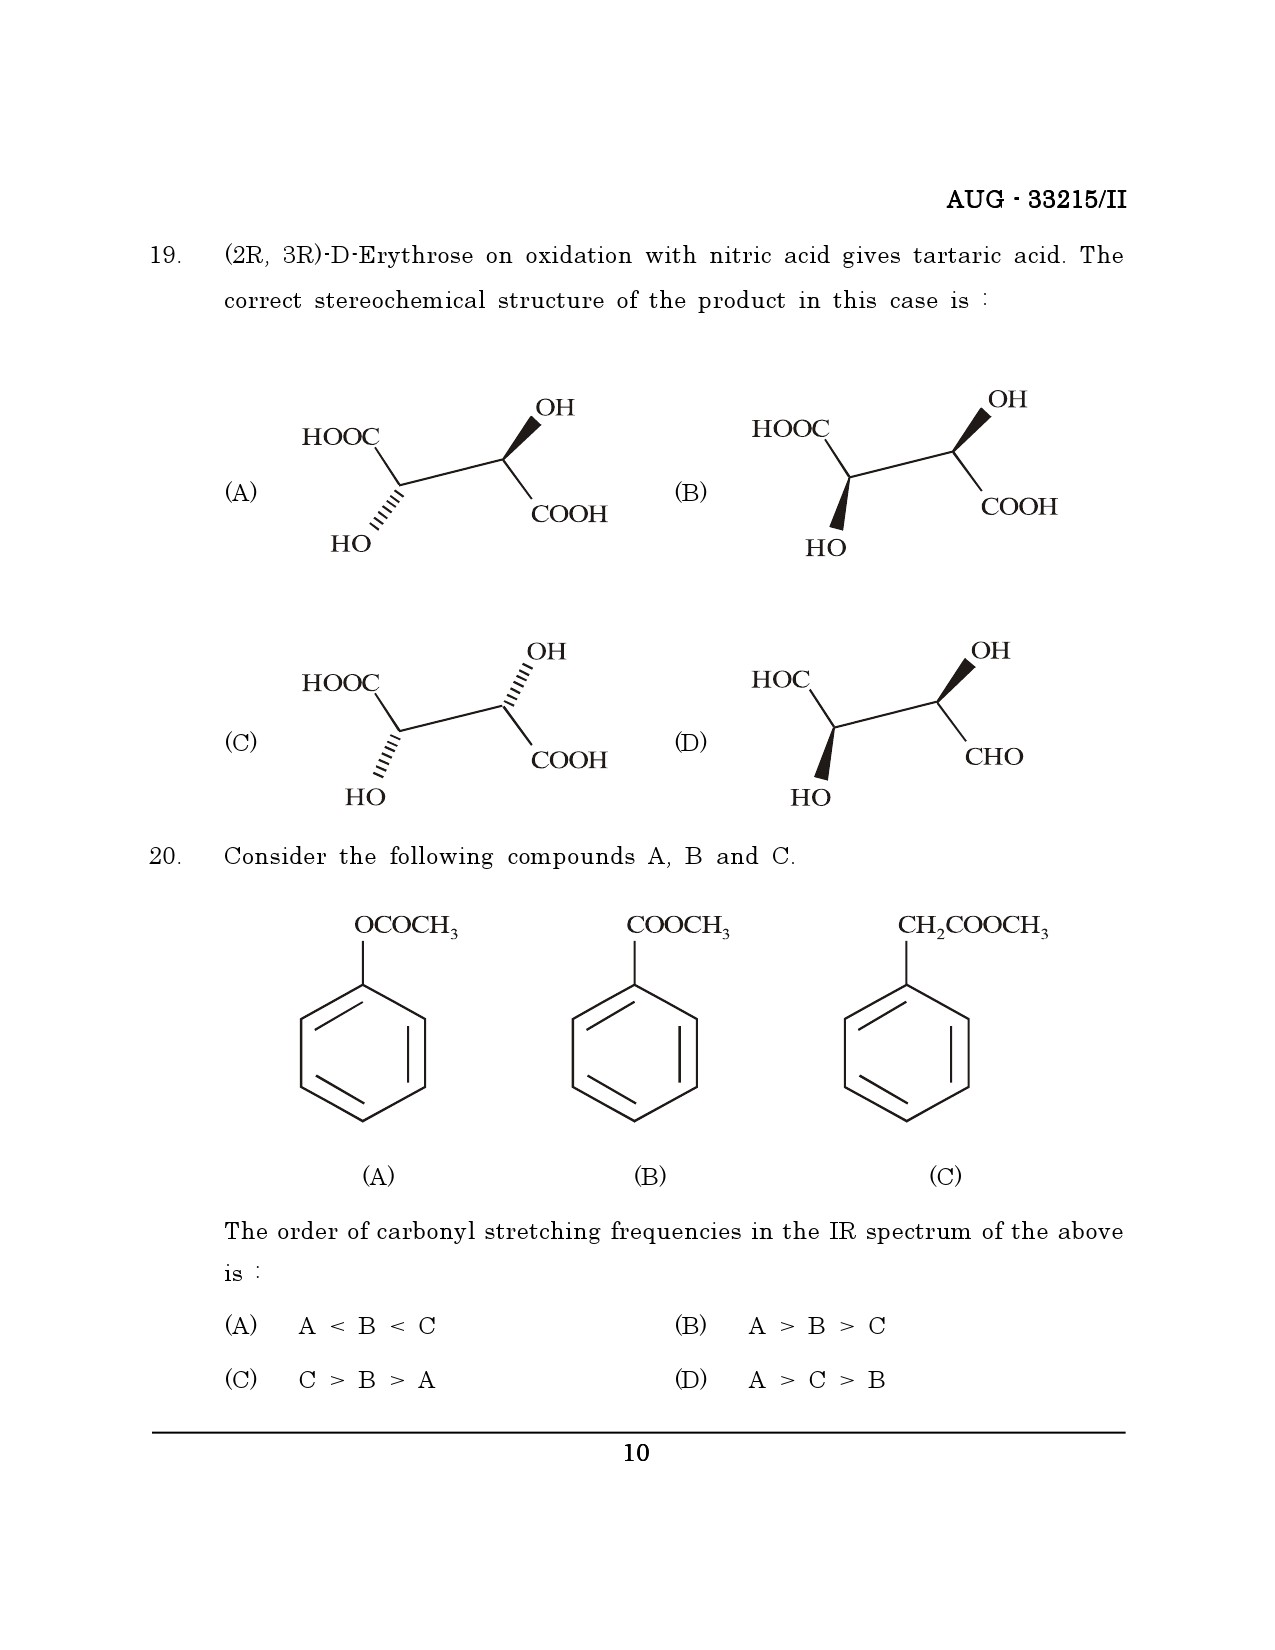 Maharashtra SET Chemical Sciences Question Paper II August 2015 9